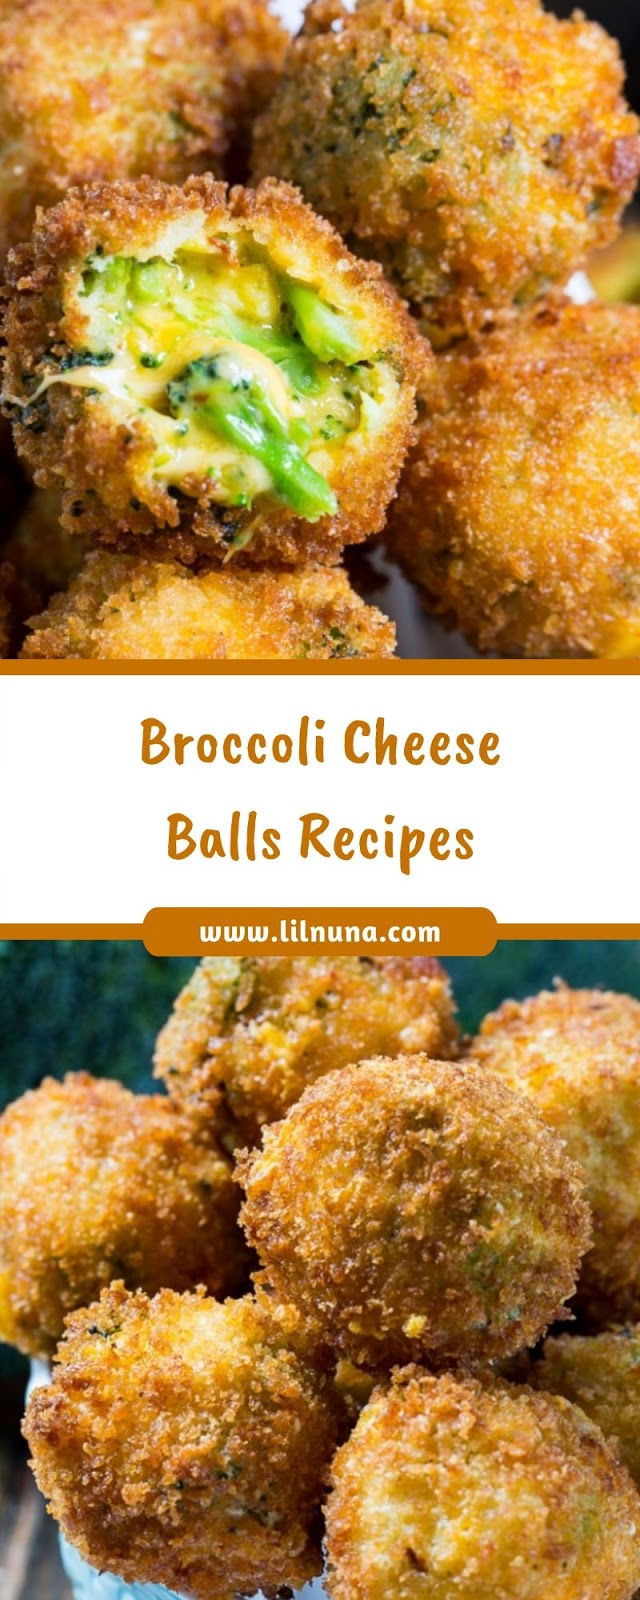 Broccoli Cheese Balls Recipes